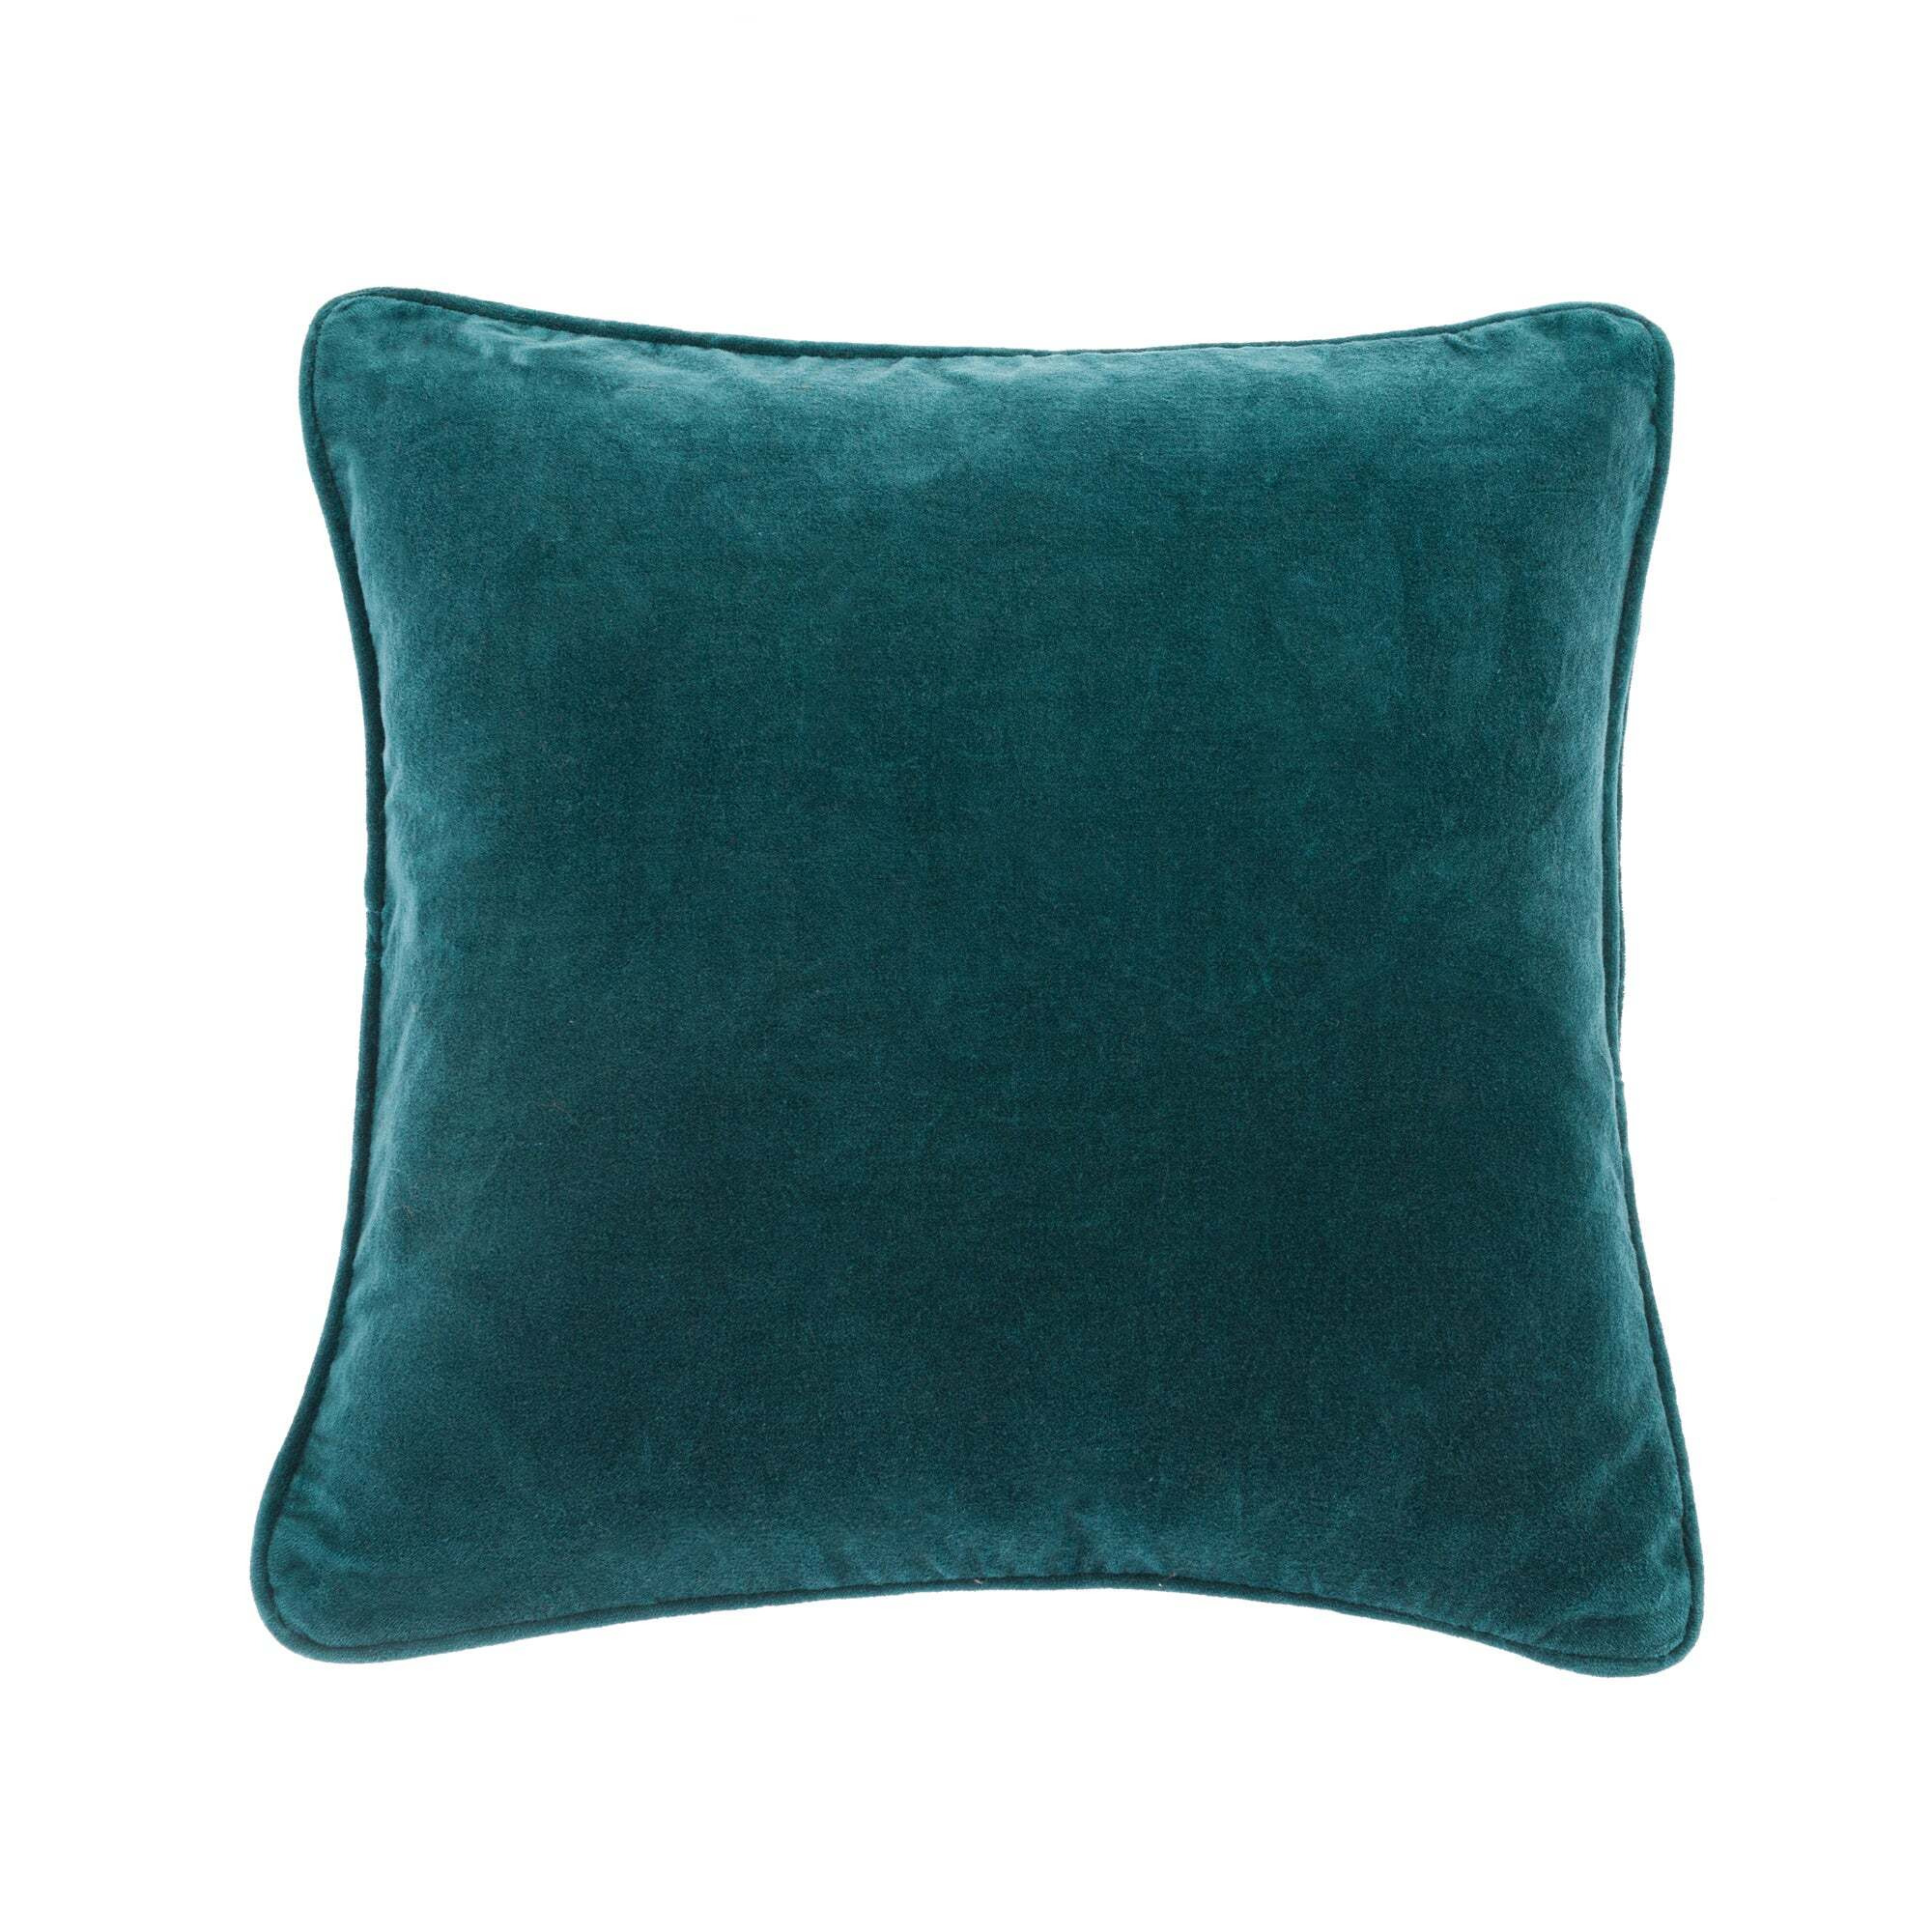 Clara Cotton Velvet Square Cushion Teal Blue